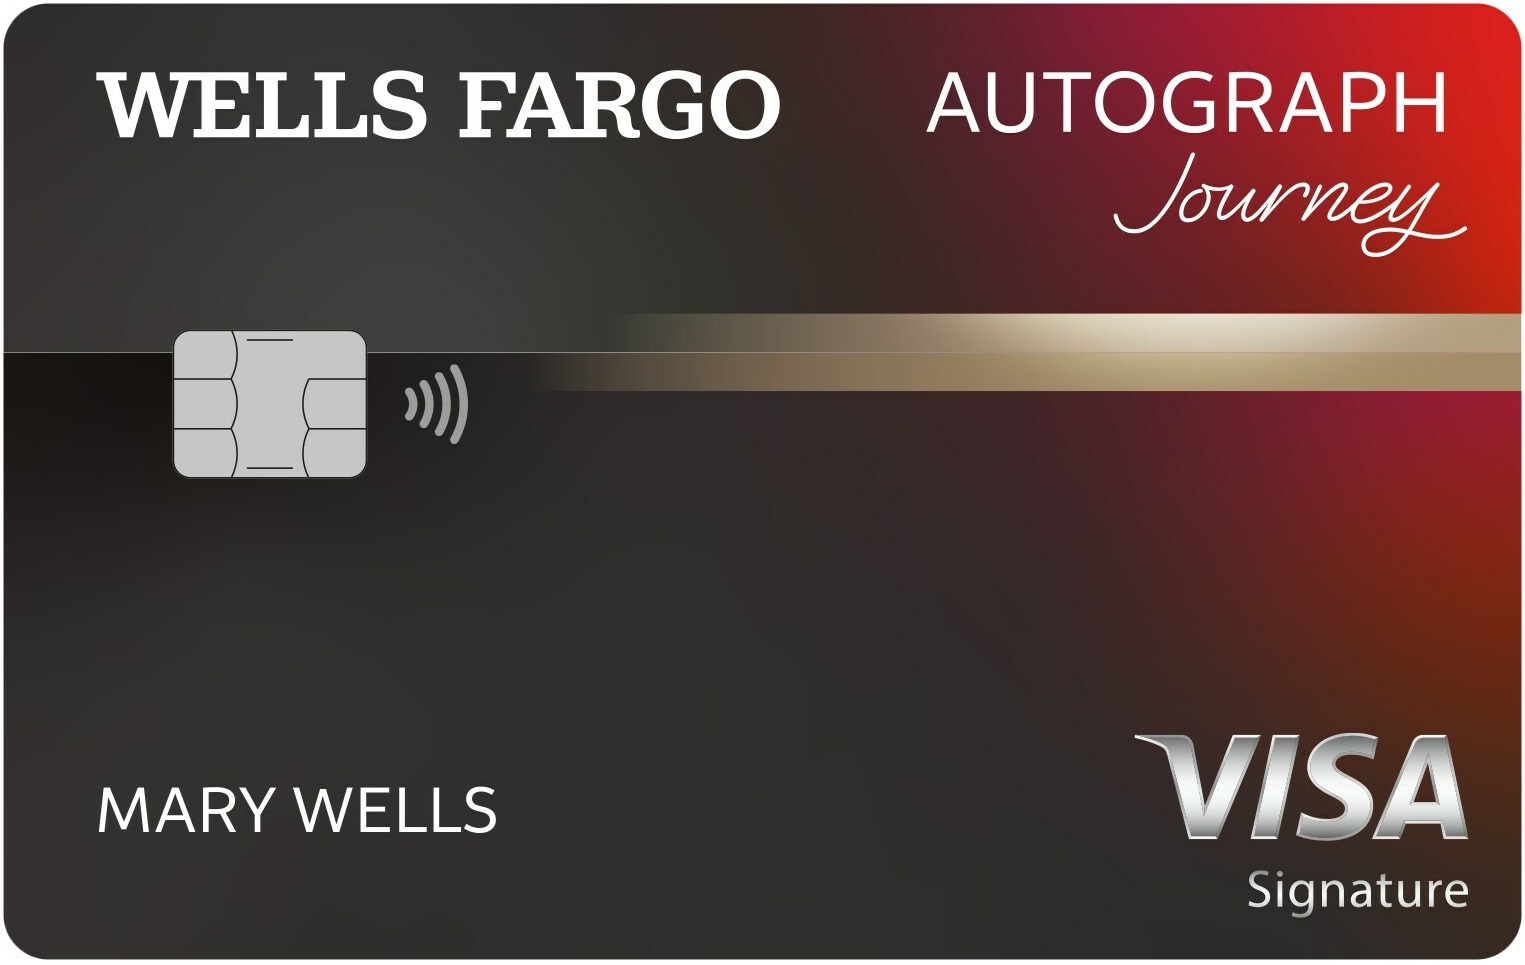 Wells Fargo Autograph Journey Visa card